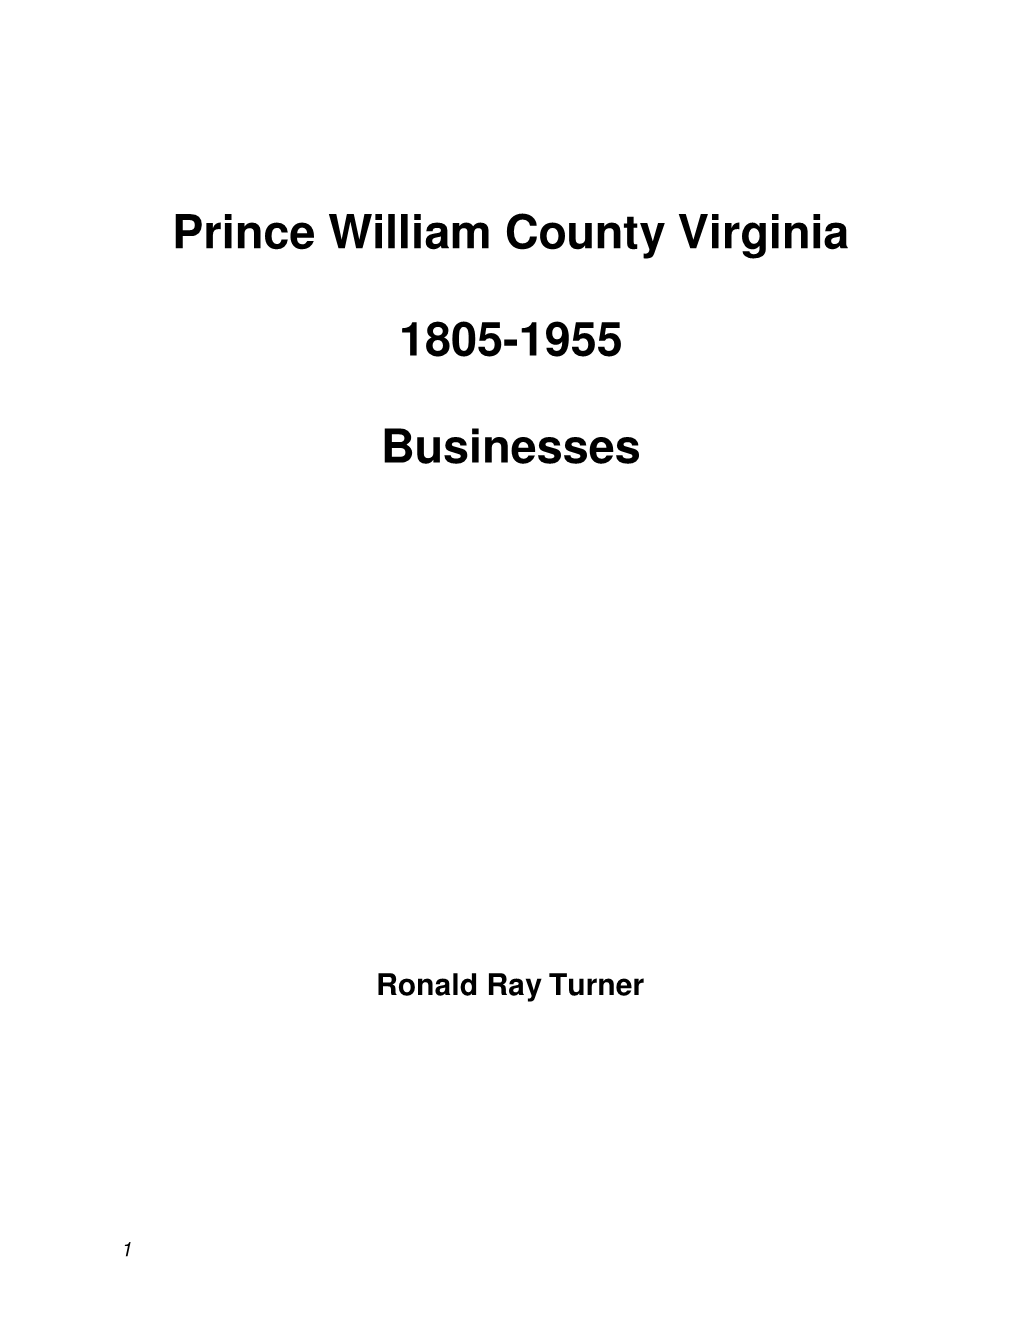 Prince William County Virginia 1805-1955 Businesses